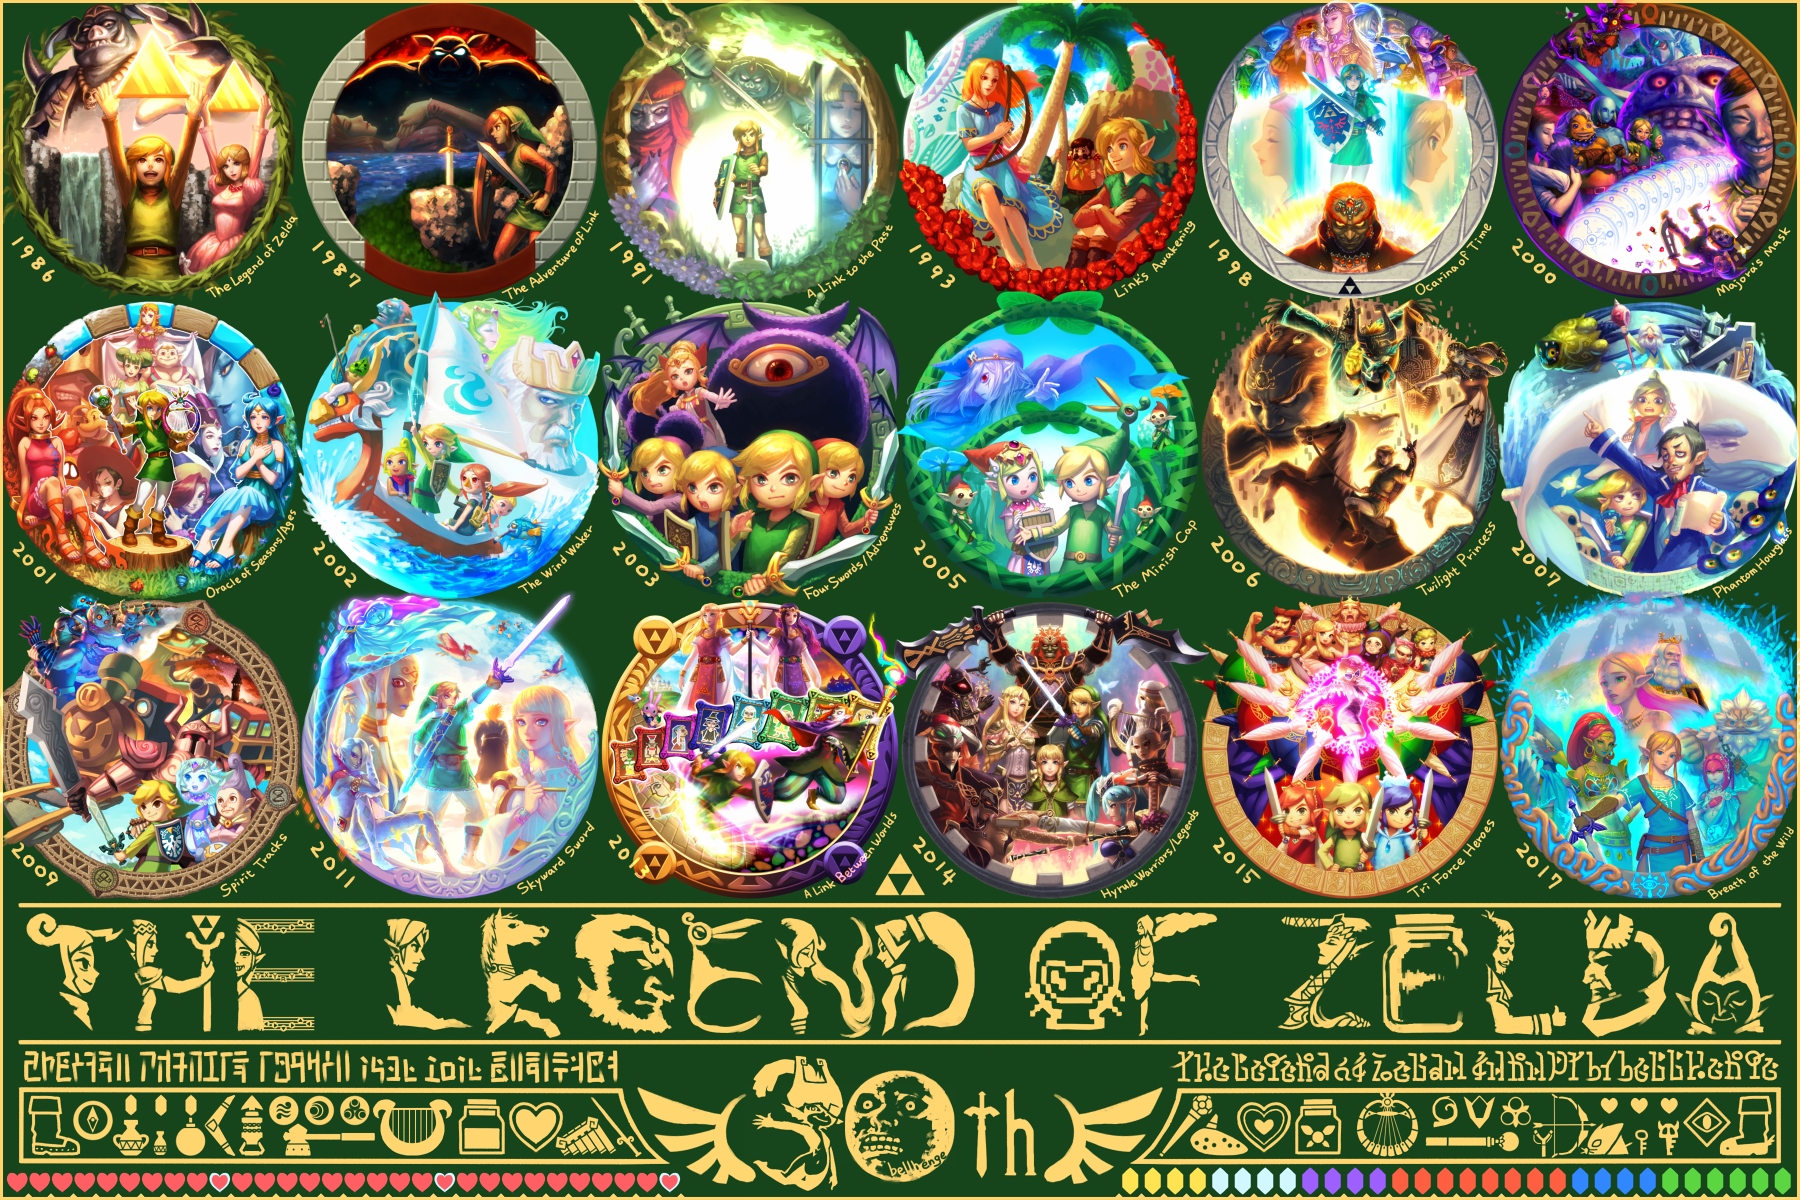 the legend of zelda: ocarina of time, video game, the legend of zelda, hyrule warriors legends, hyrule warriors, the legend of zelda: a link between worlds, the legend of zelda: a link to the past, the legend of zelda: breath of the wild, the legend of zelda: four swords adventures, the legend of zelda: link's awakening, the legend of zelda: majora's mask, the legend of zelda: oracle of ages, the legend of zelda: oracle of seasons, the legend of zelda: phantom hourglass, the legend of zelda: skyward sword, the legend of zelda: spirit tracks, the legend of zelda: the minish cap, the legend of zelda: the wind waker, the legend of zelda: tri force heroes, the legend of zelda: twilight princess, zelda ii: the adventure of link, zelda